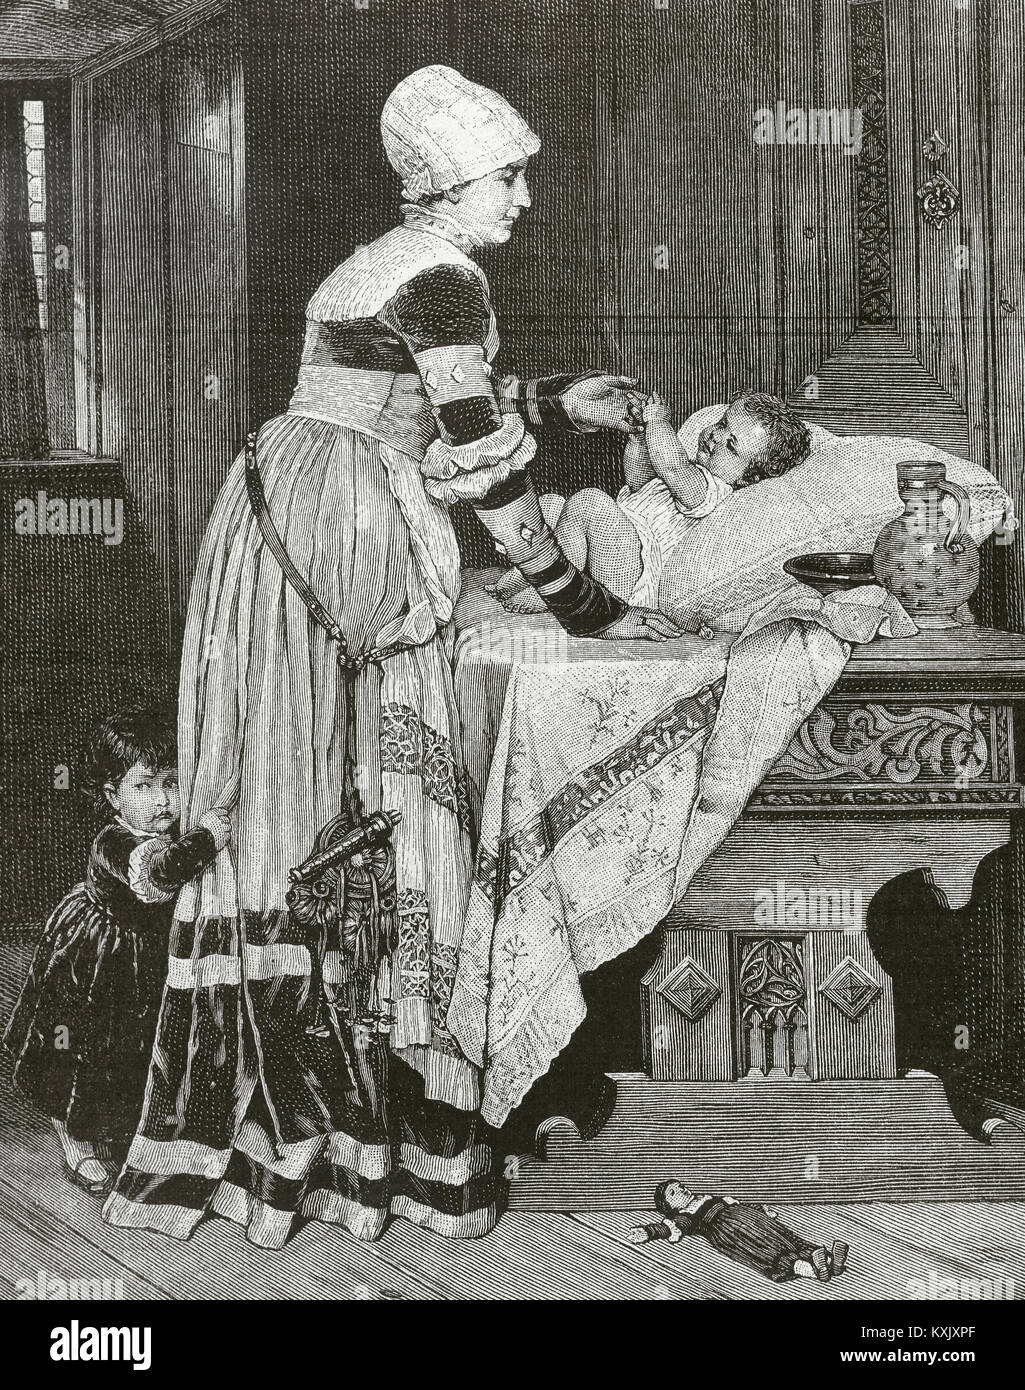 The heir of the blazons. Engraving. Almanaque de La Ilustración, 1887. Stock Photo